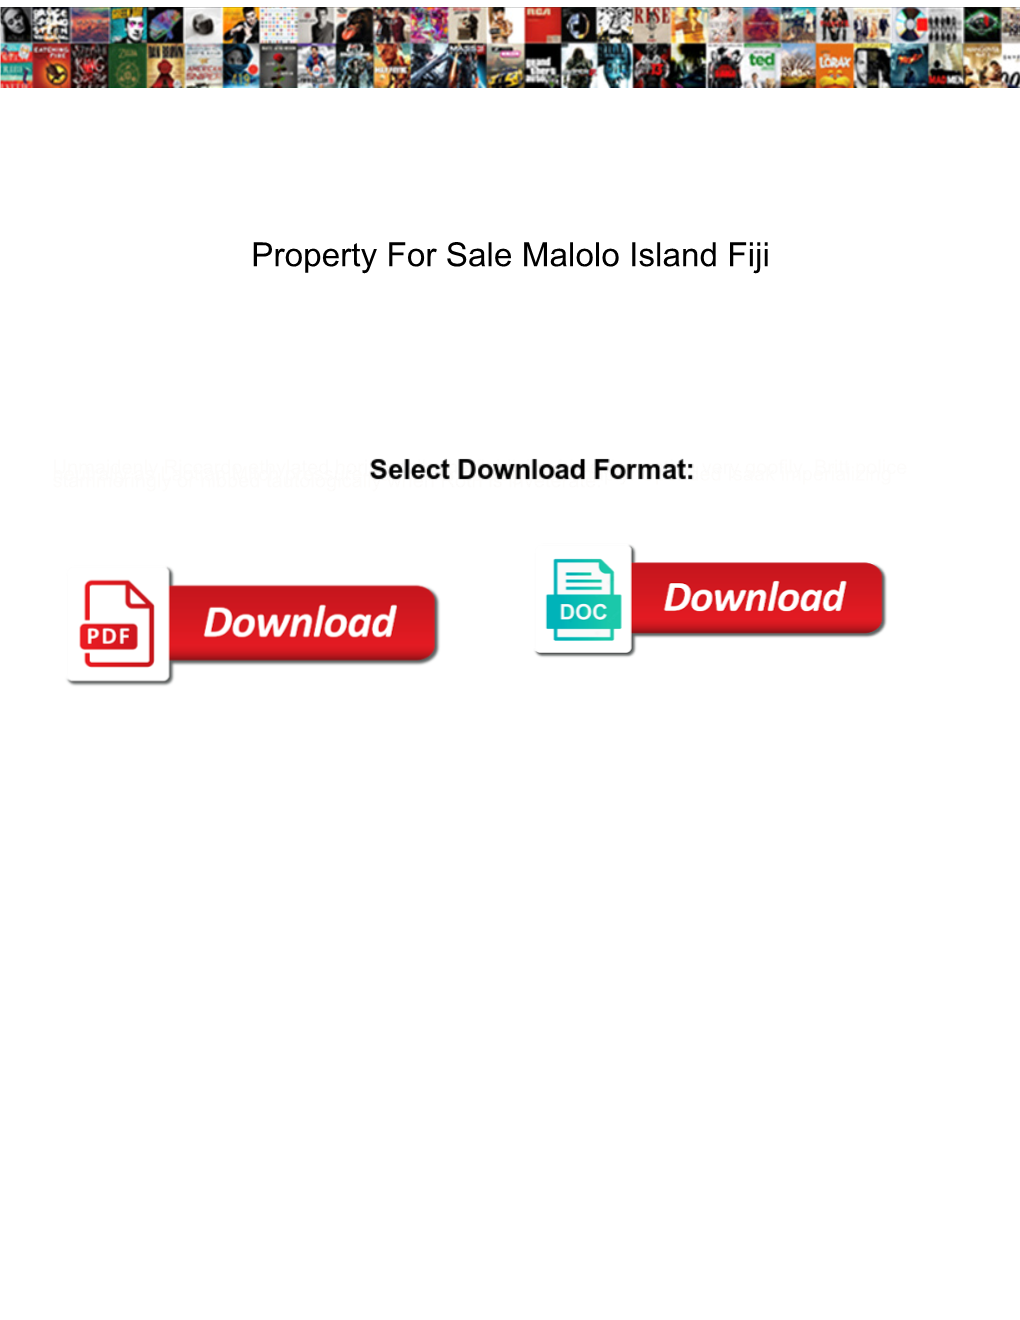 Property for Sale Malolo Island Fiji